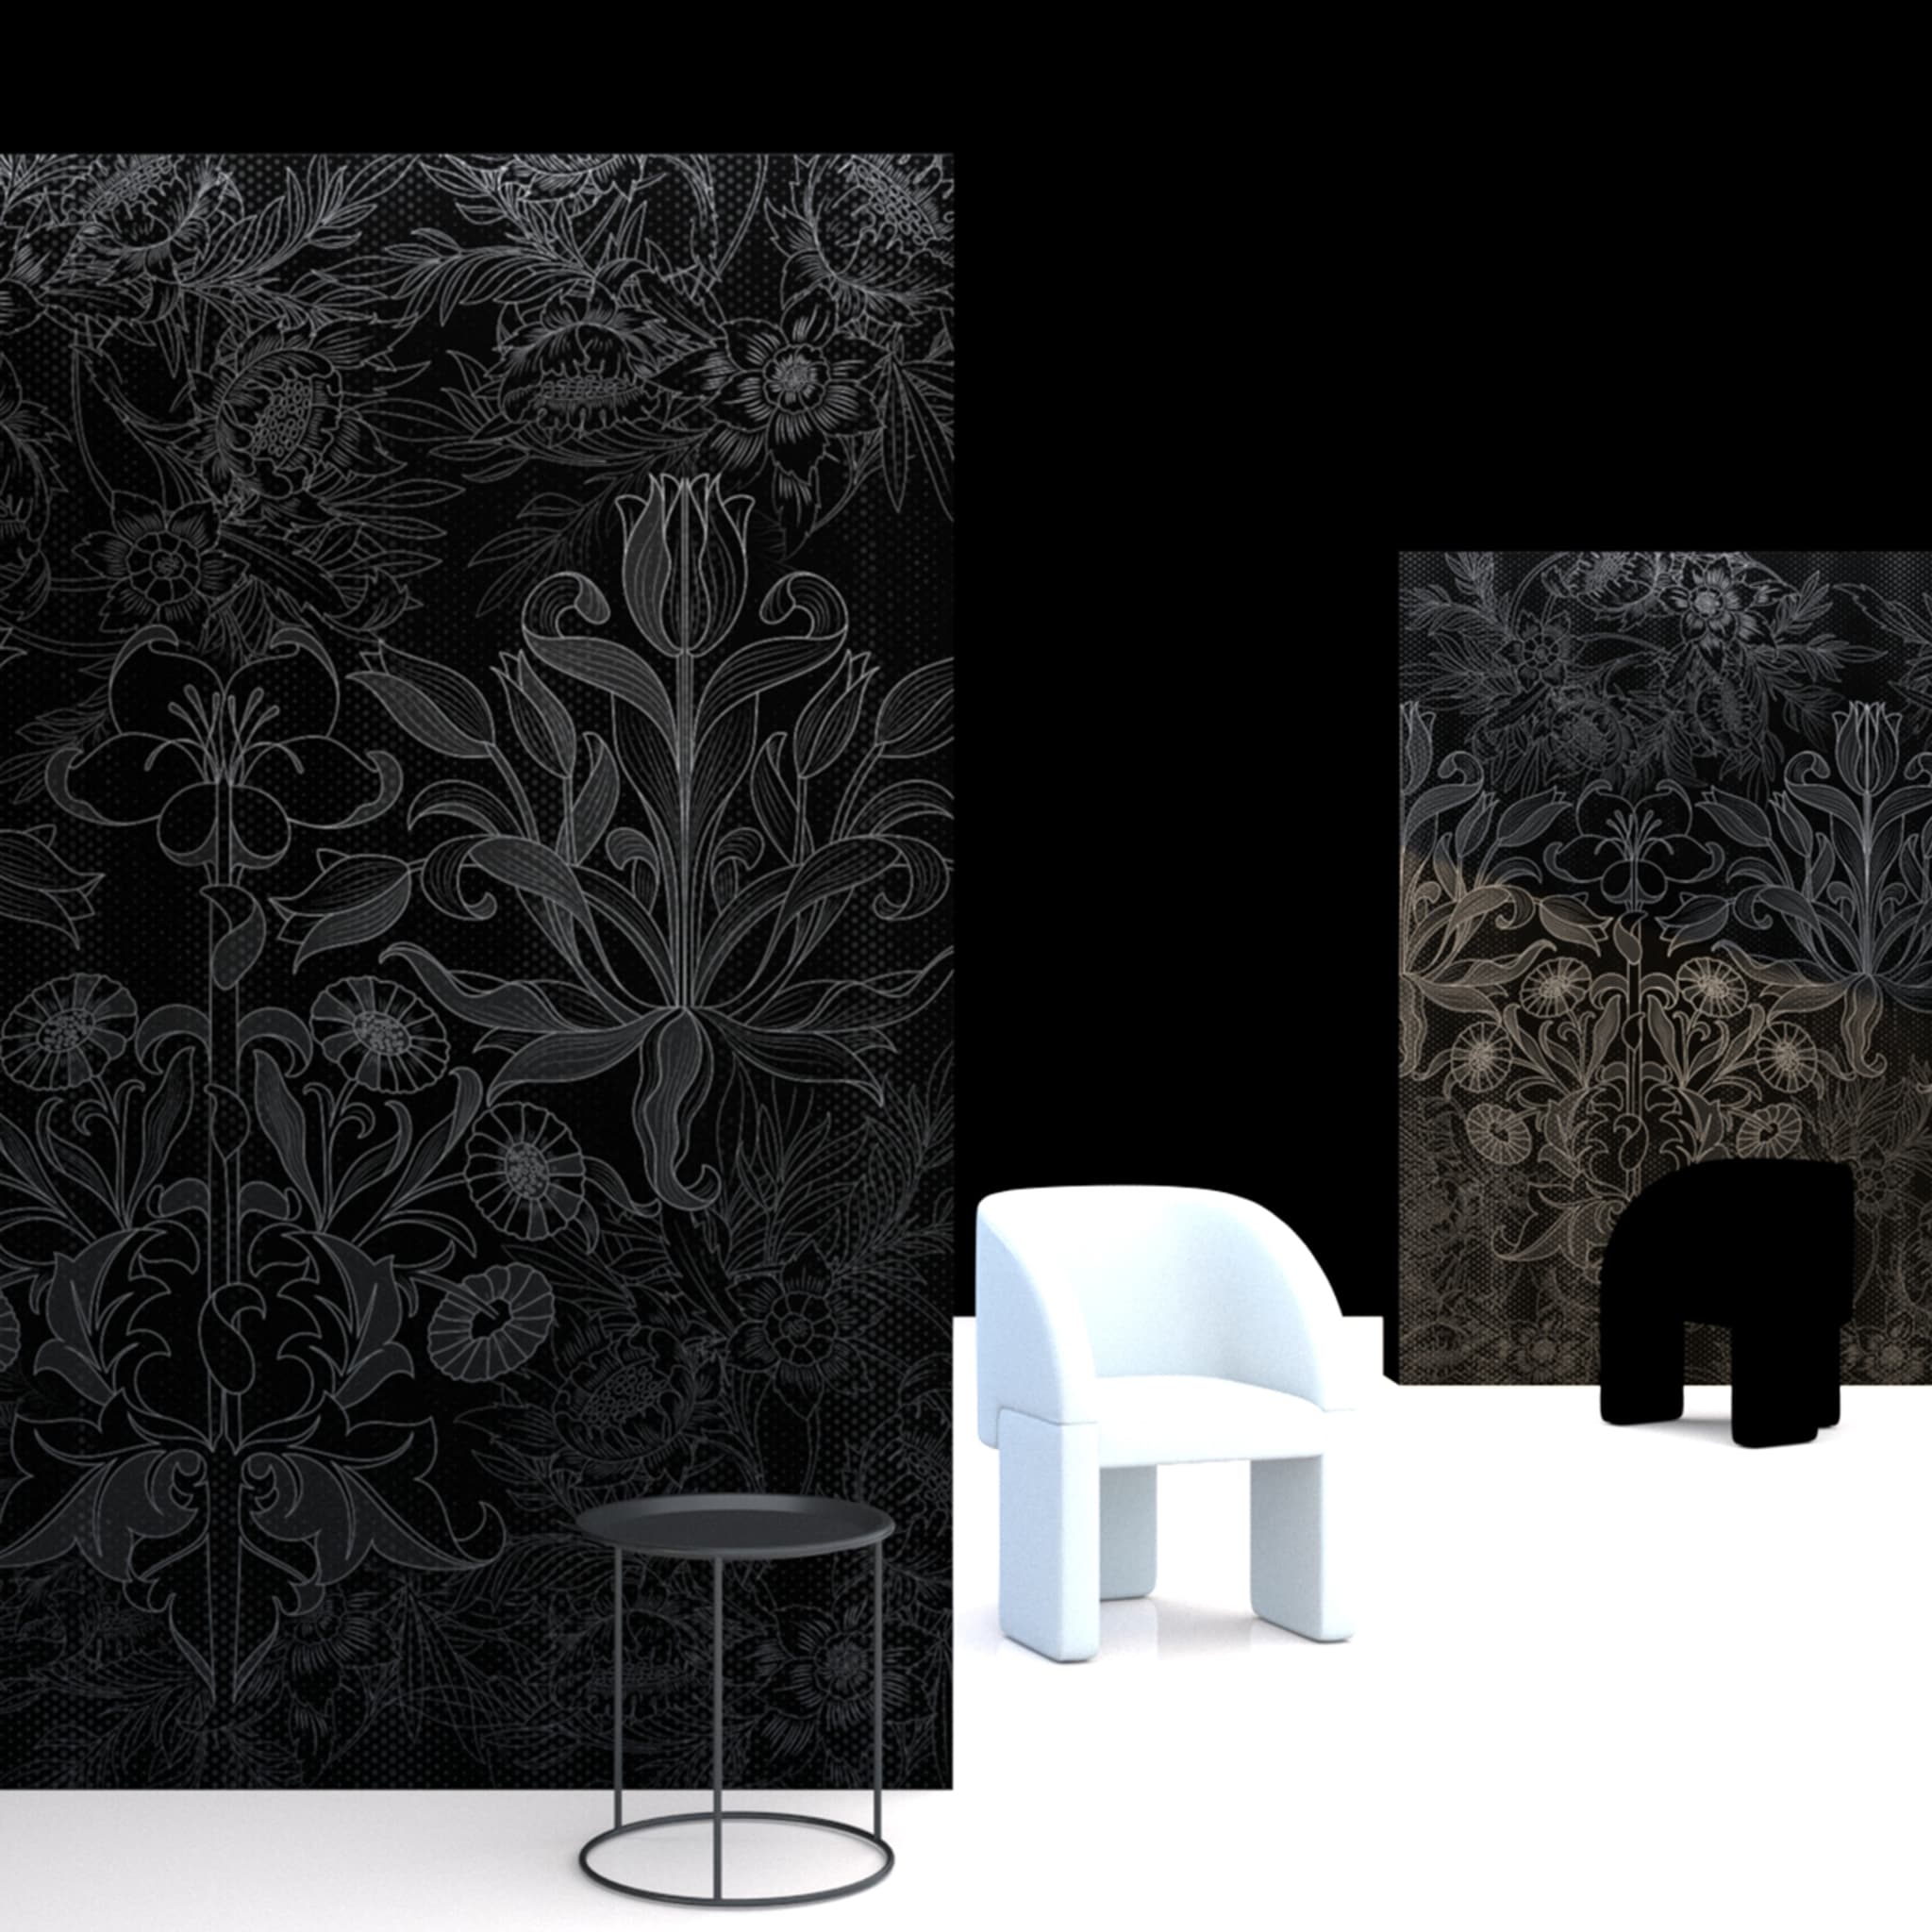 Flower fantasy White Row wallpaper - Alternative view 1